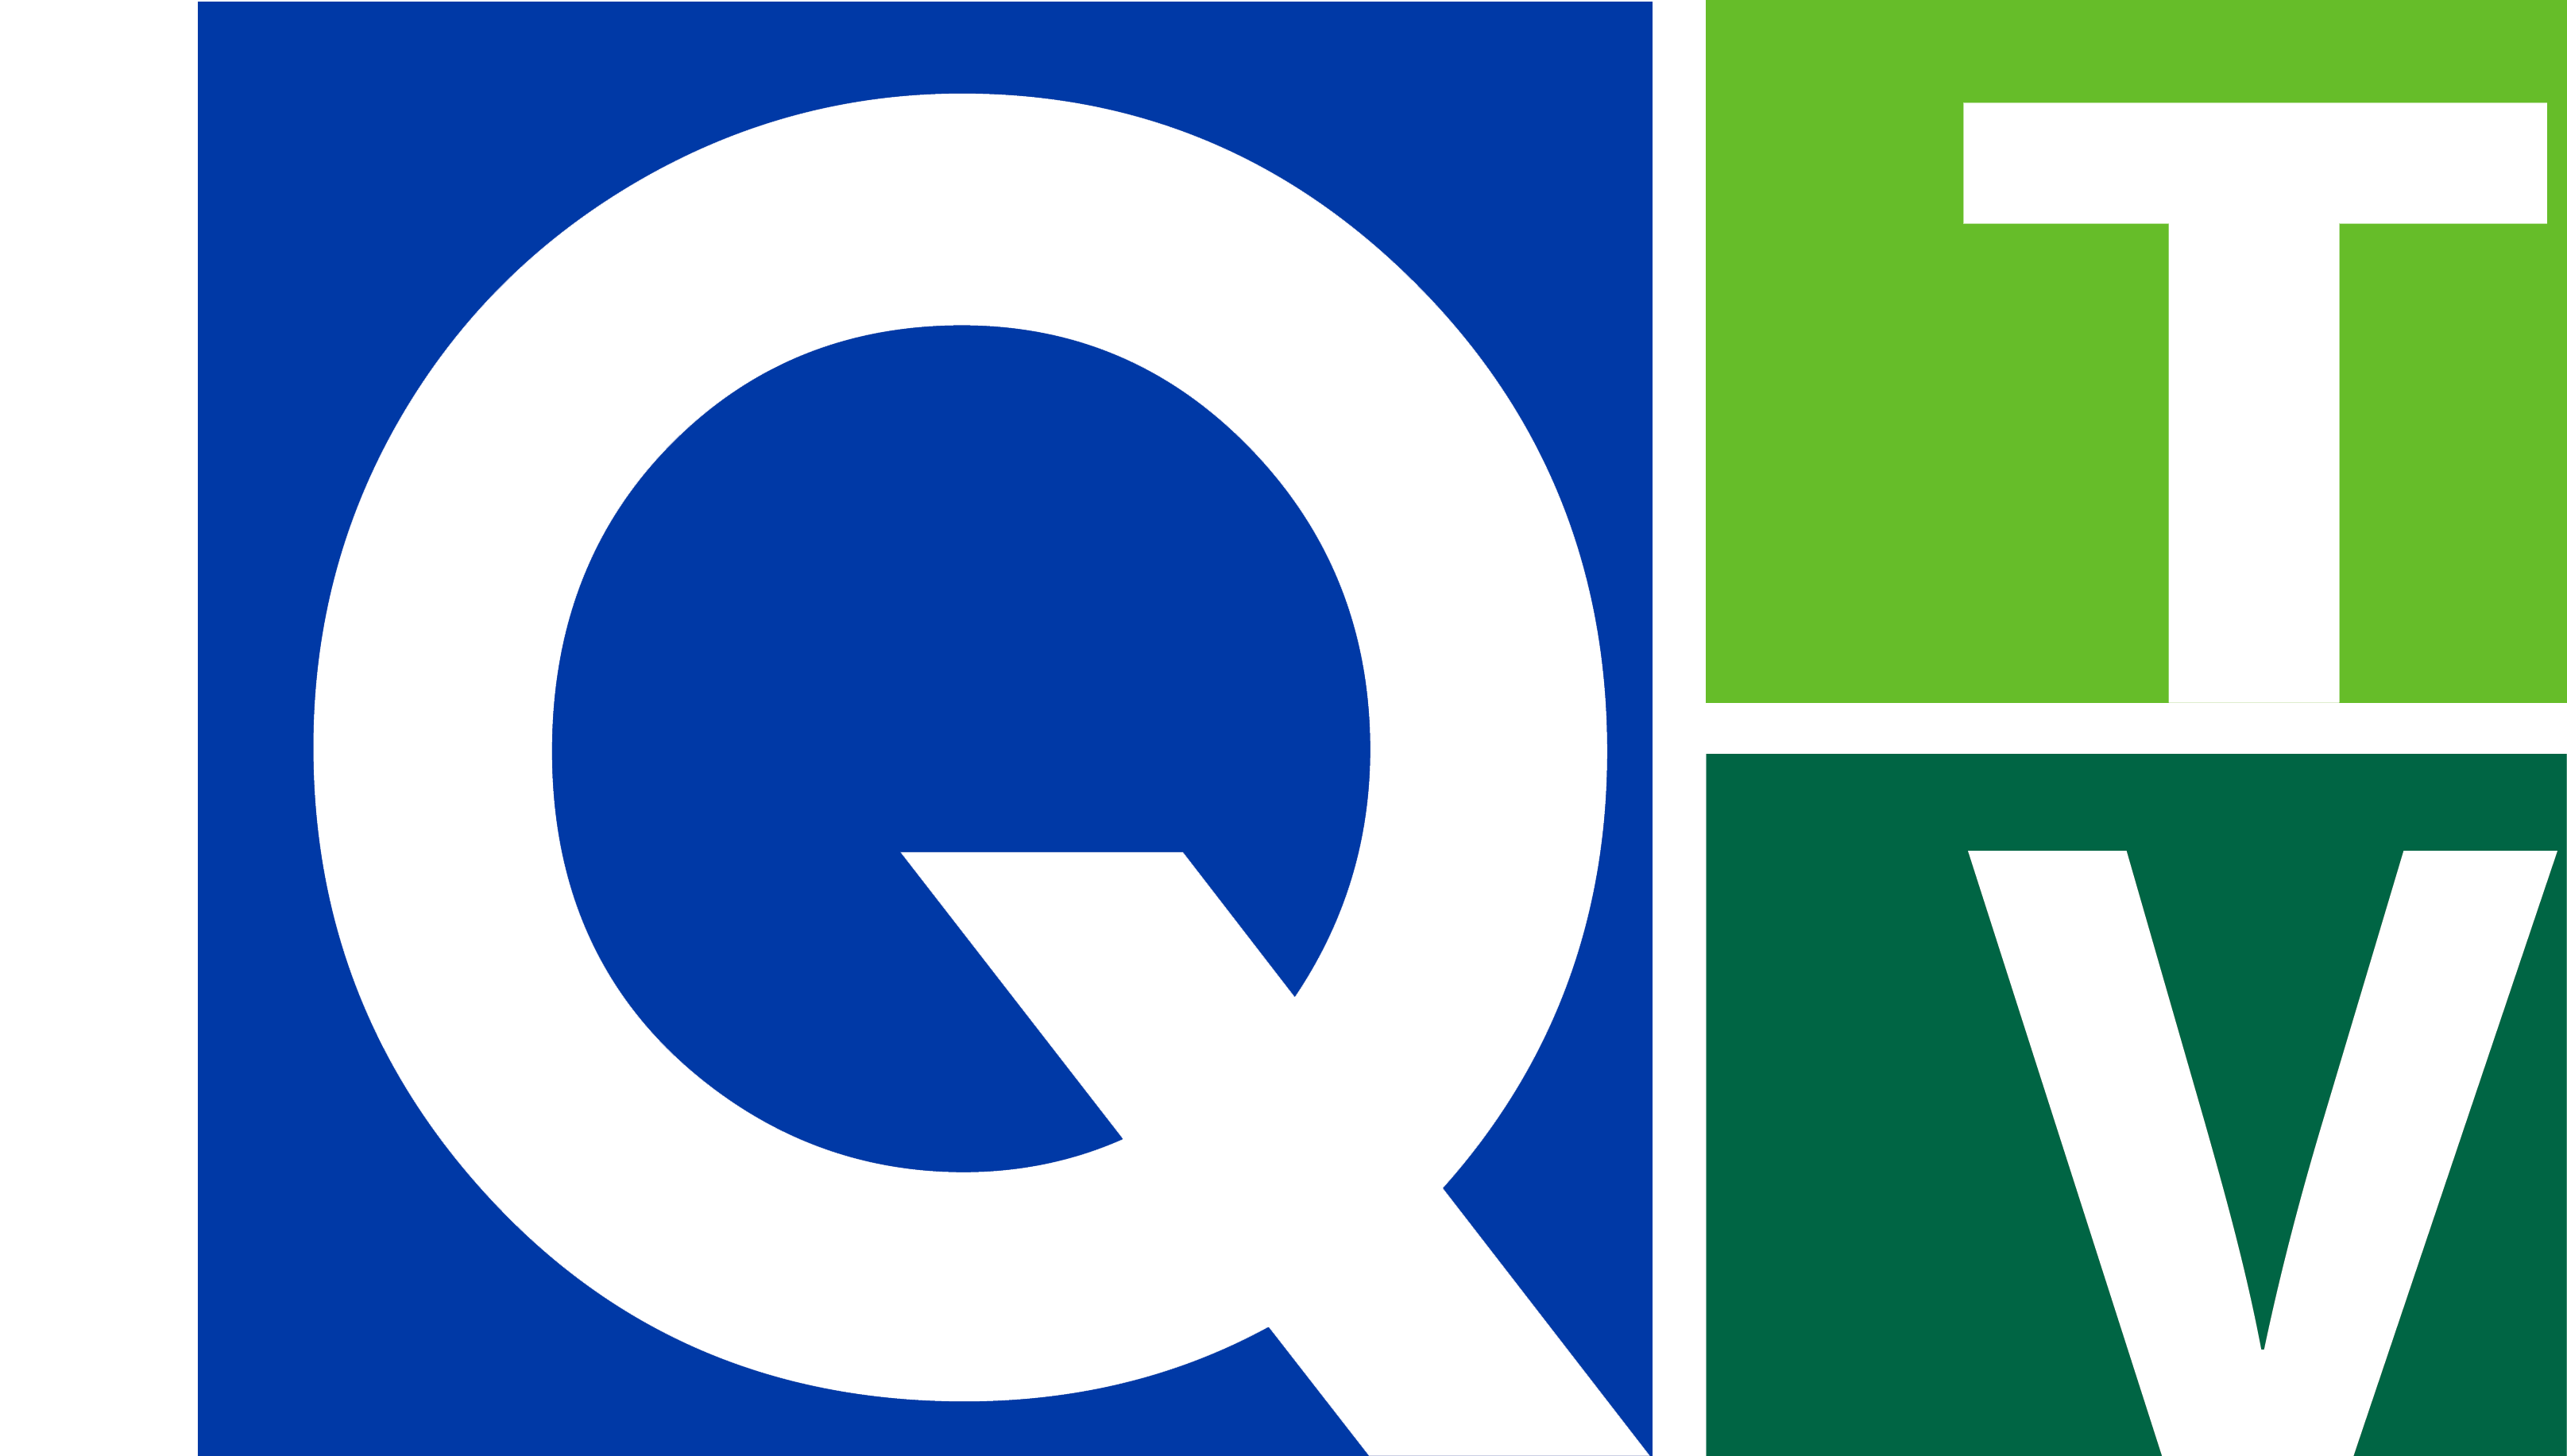 Blue Q Logo - Brand Resources | Delta Broadcasting